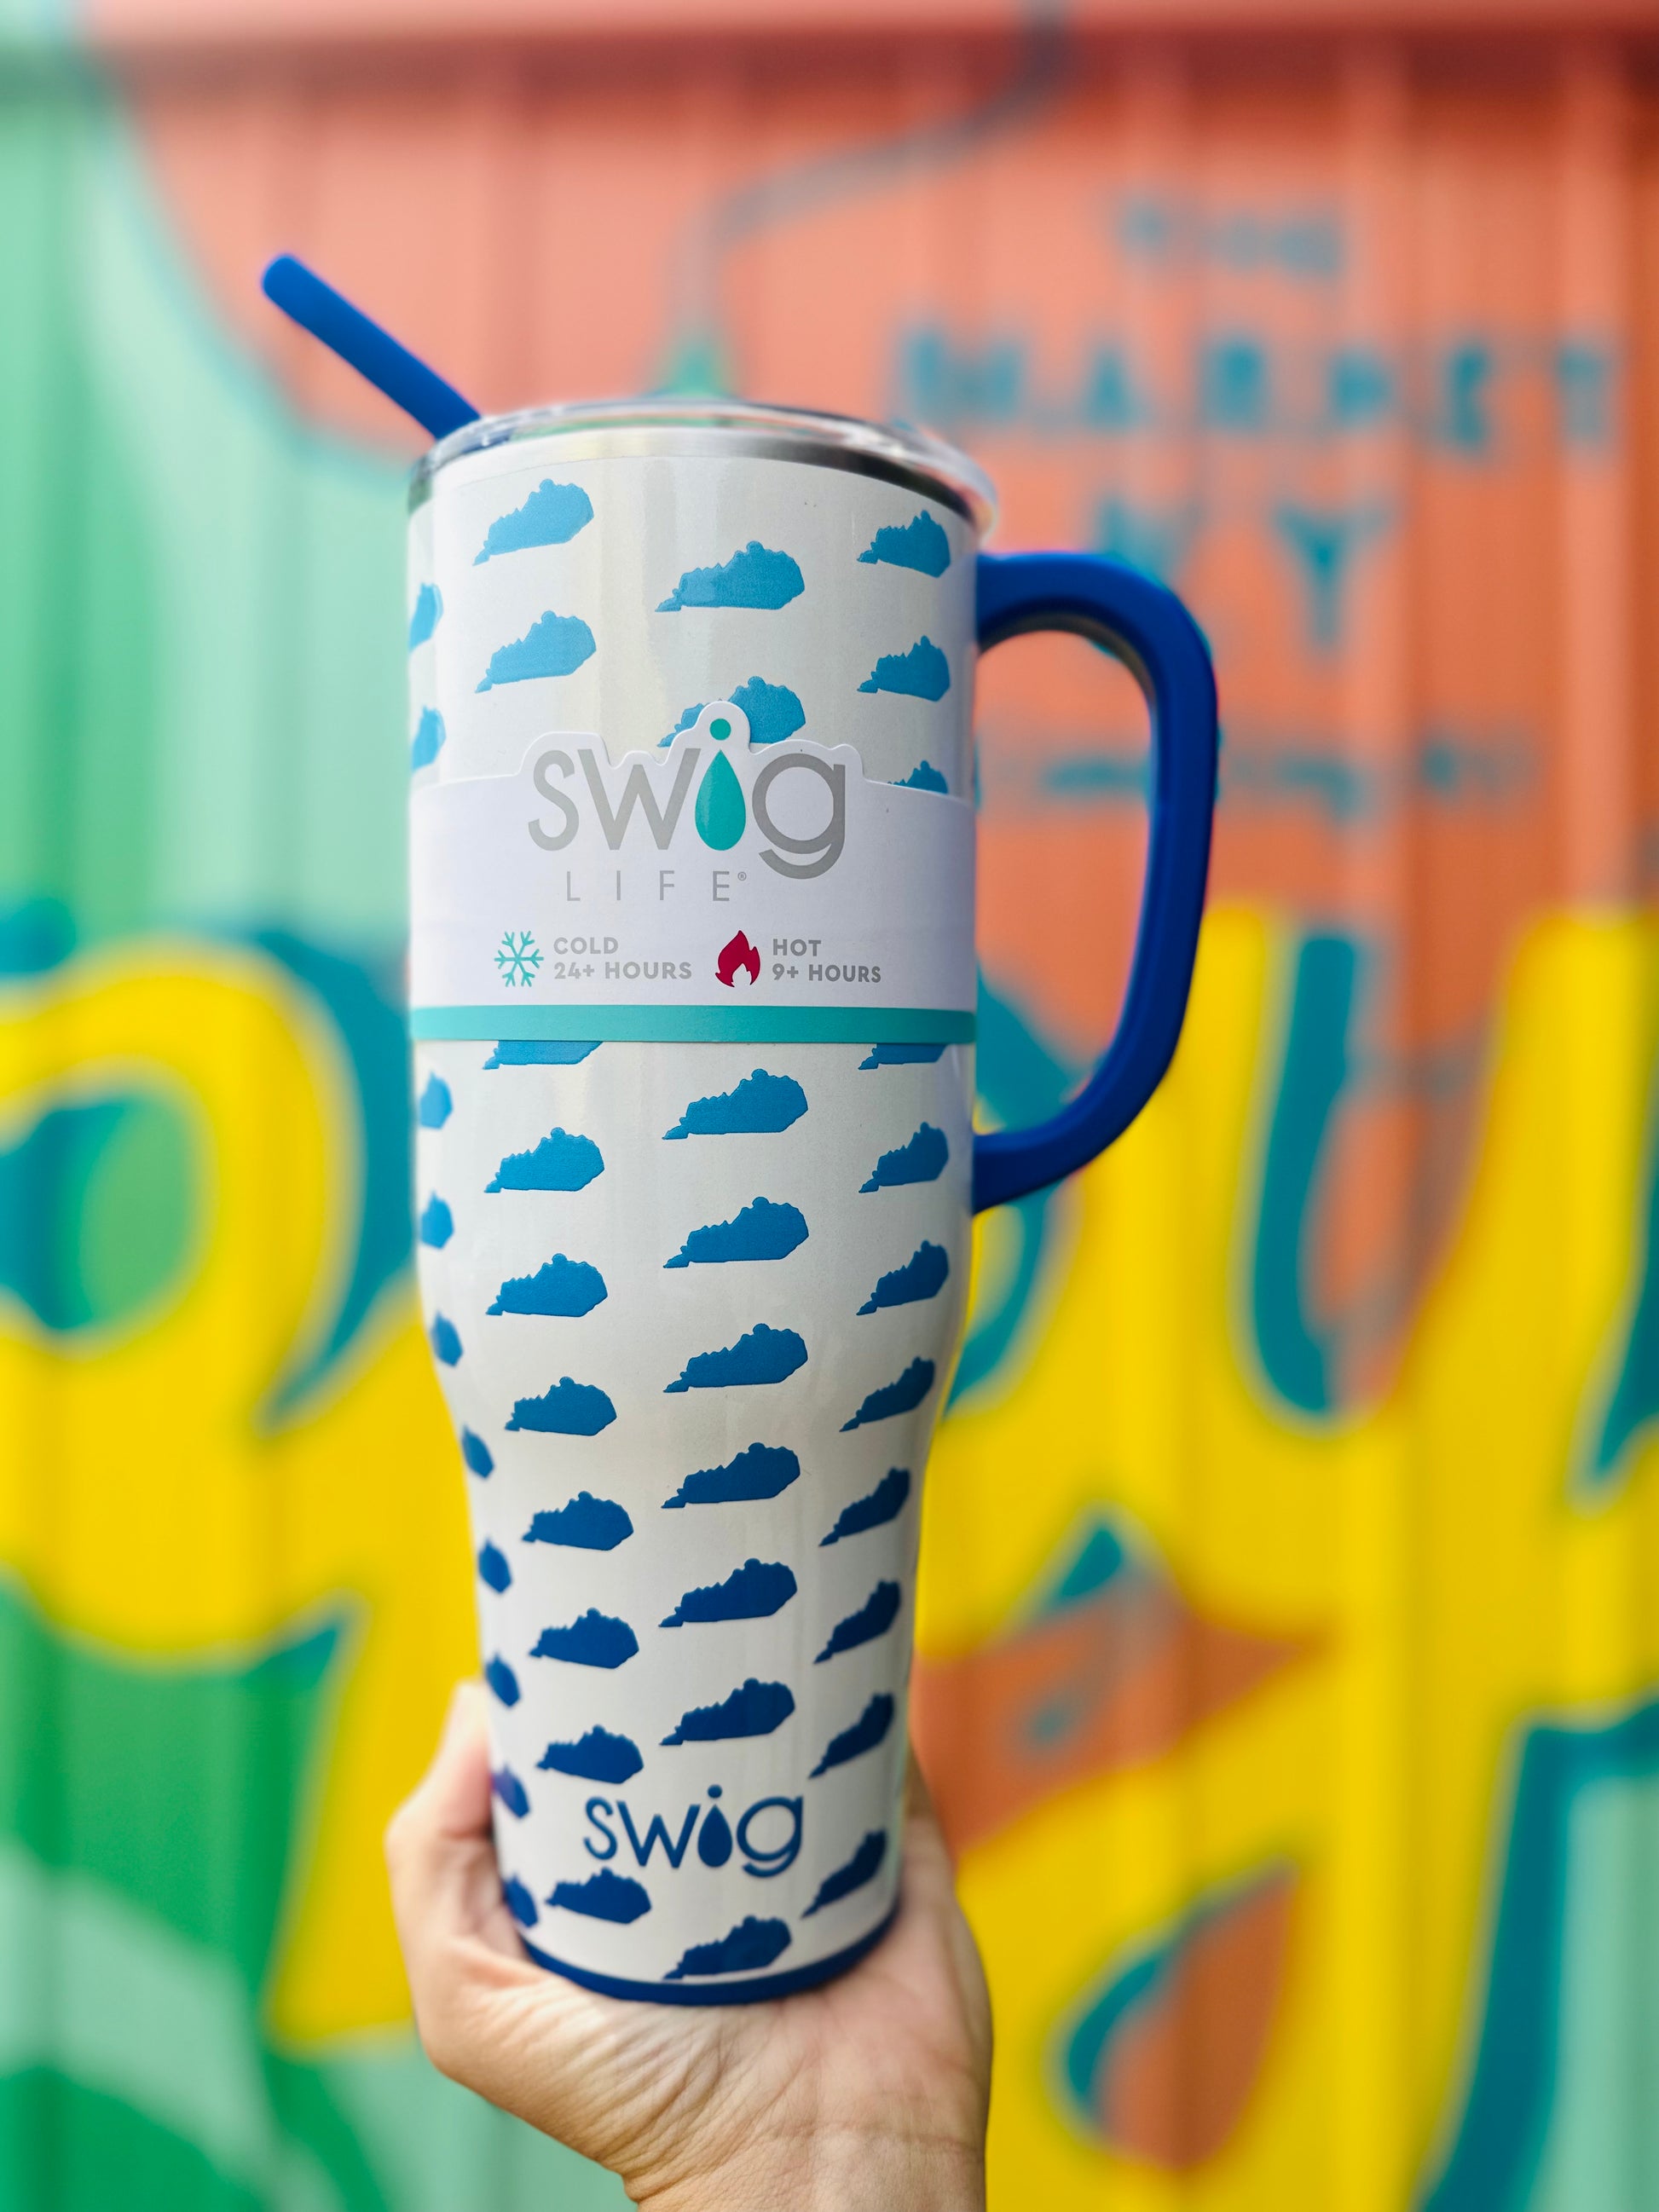 Swig 40oz Travel Mug